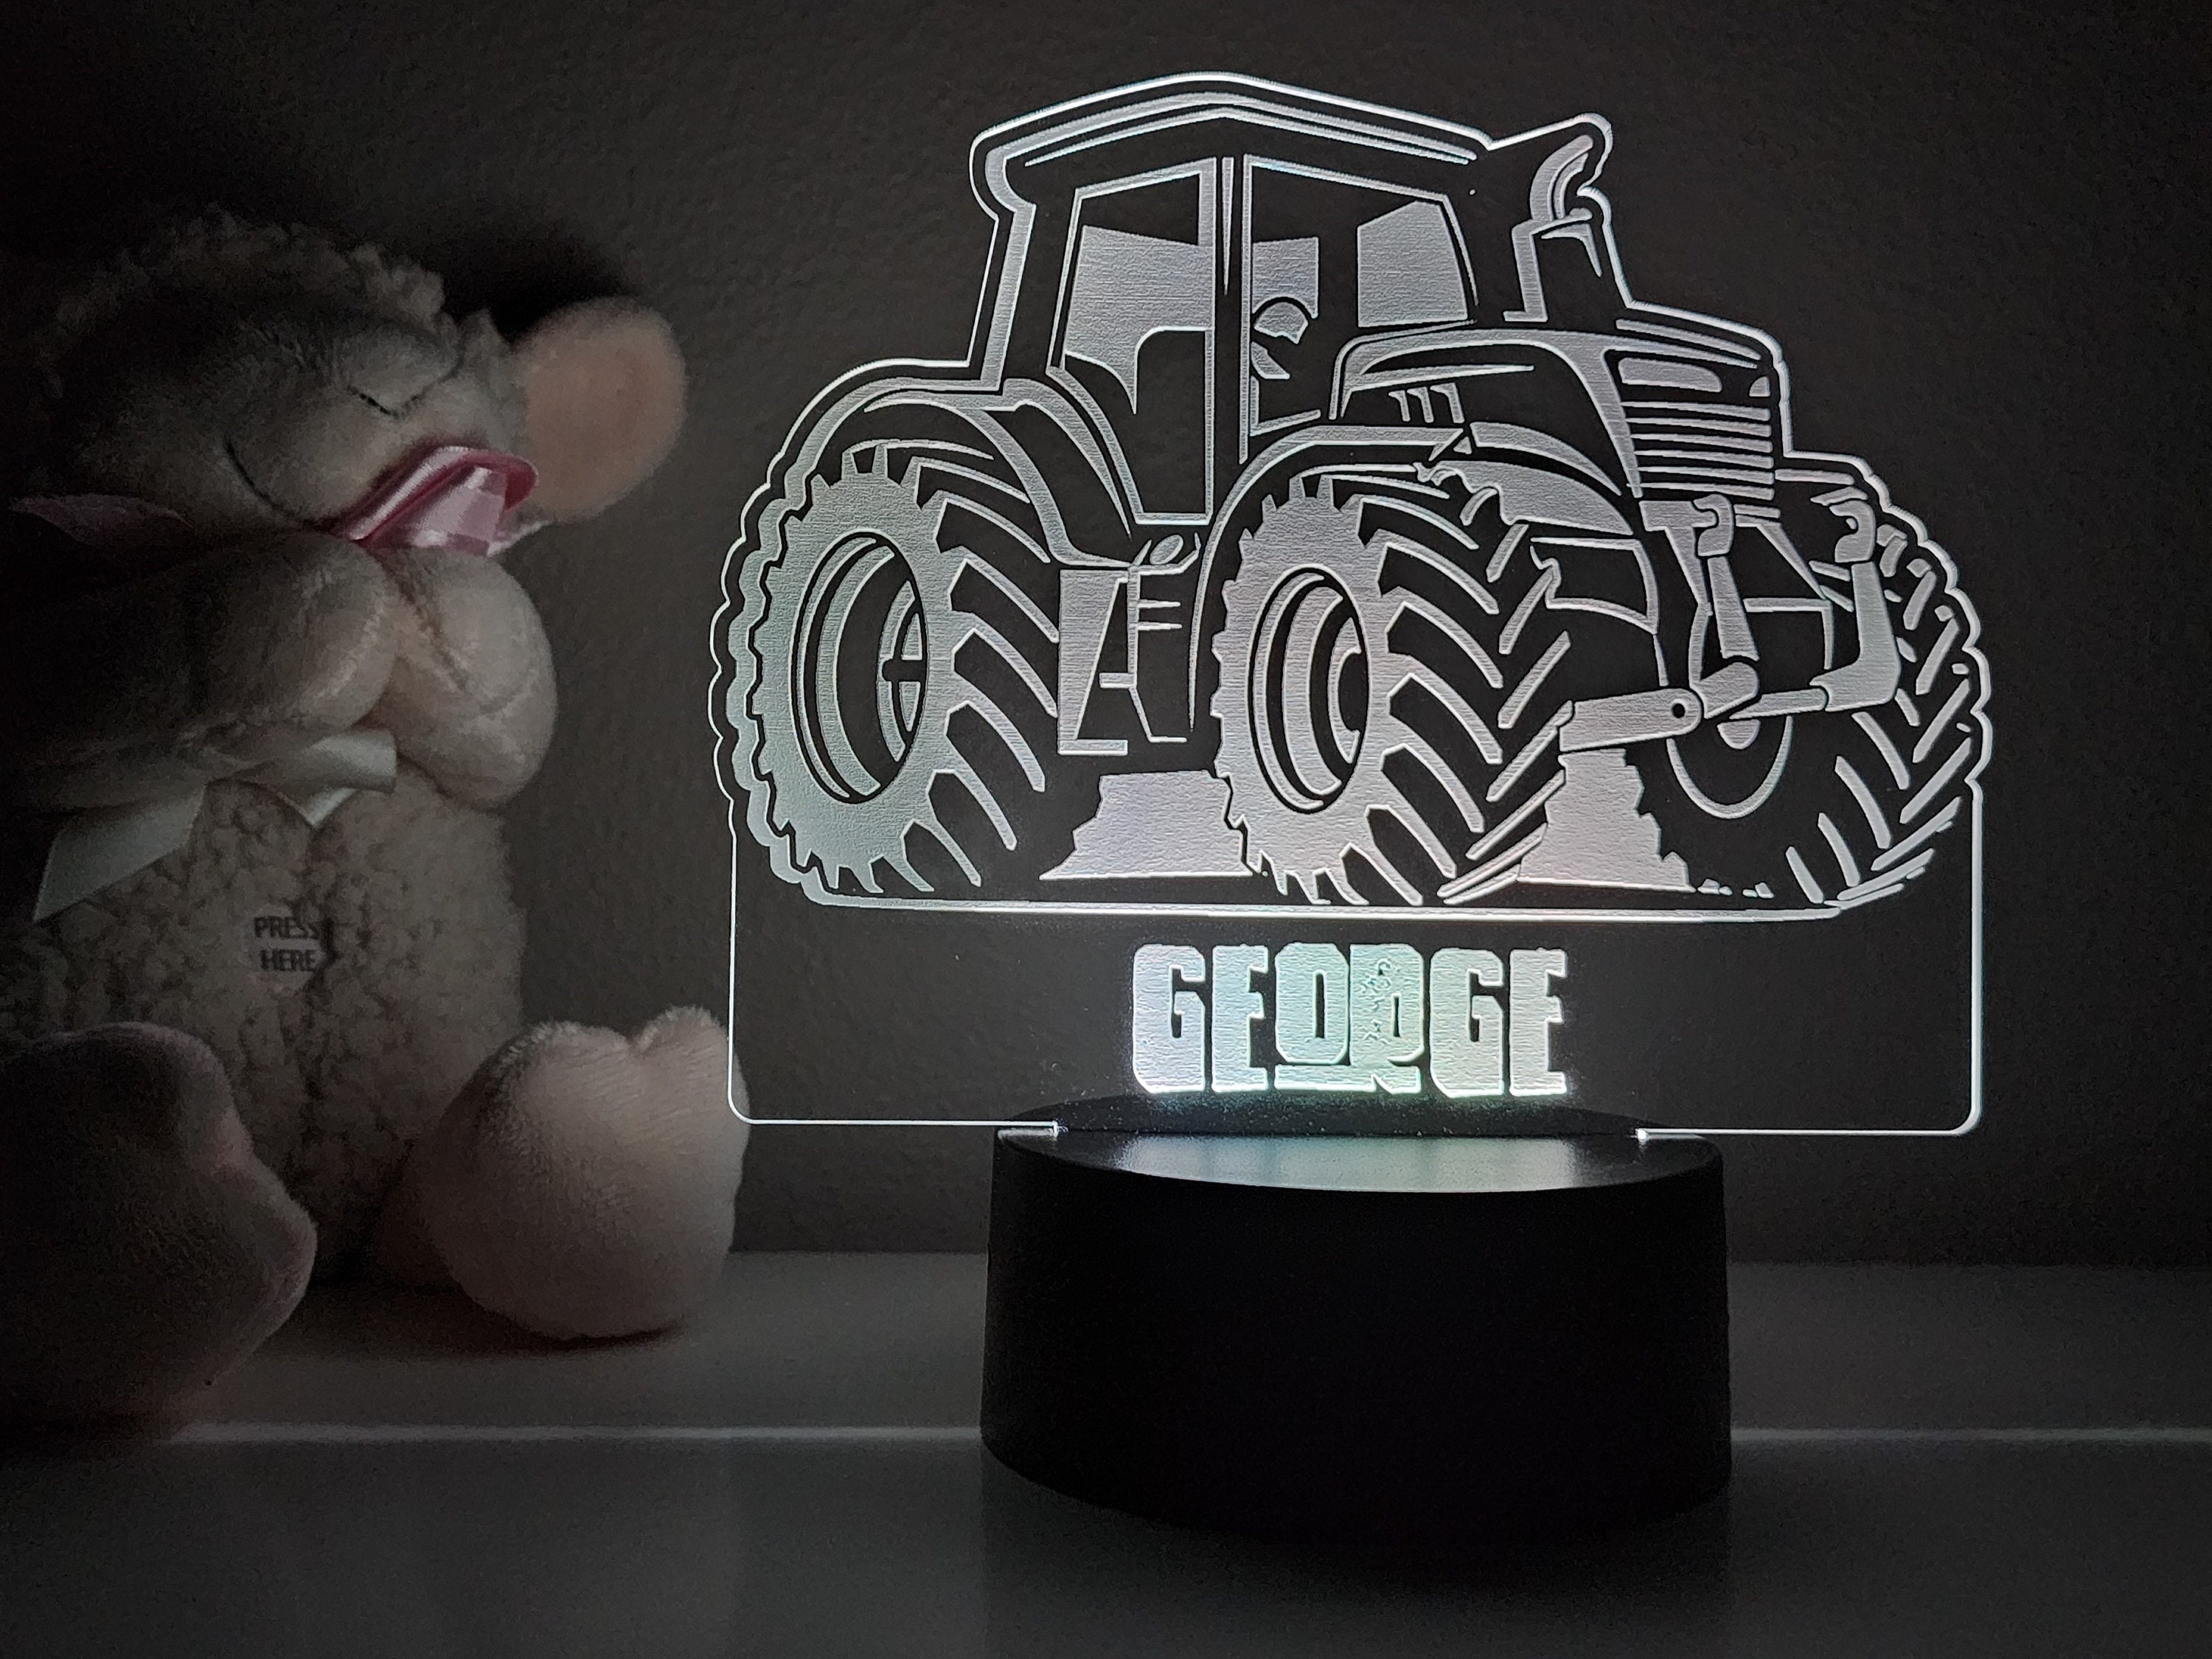 Buy Tractor Wall Lampnursery Lamp Slumber Light Personalized